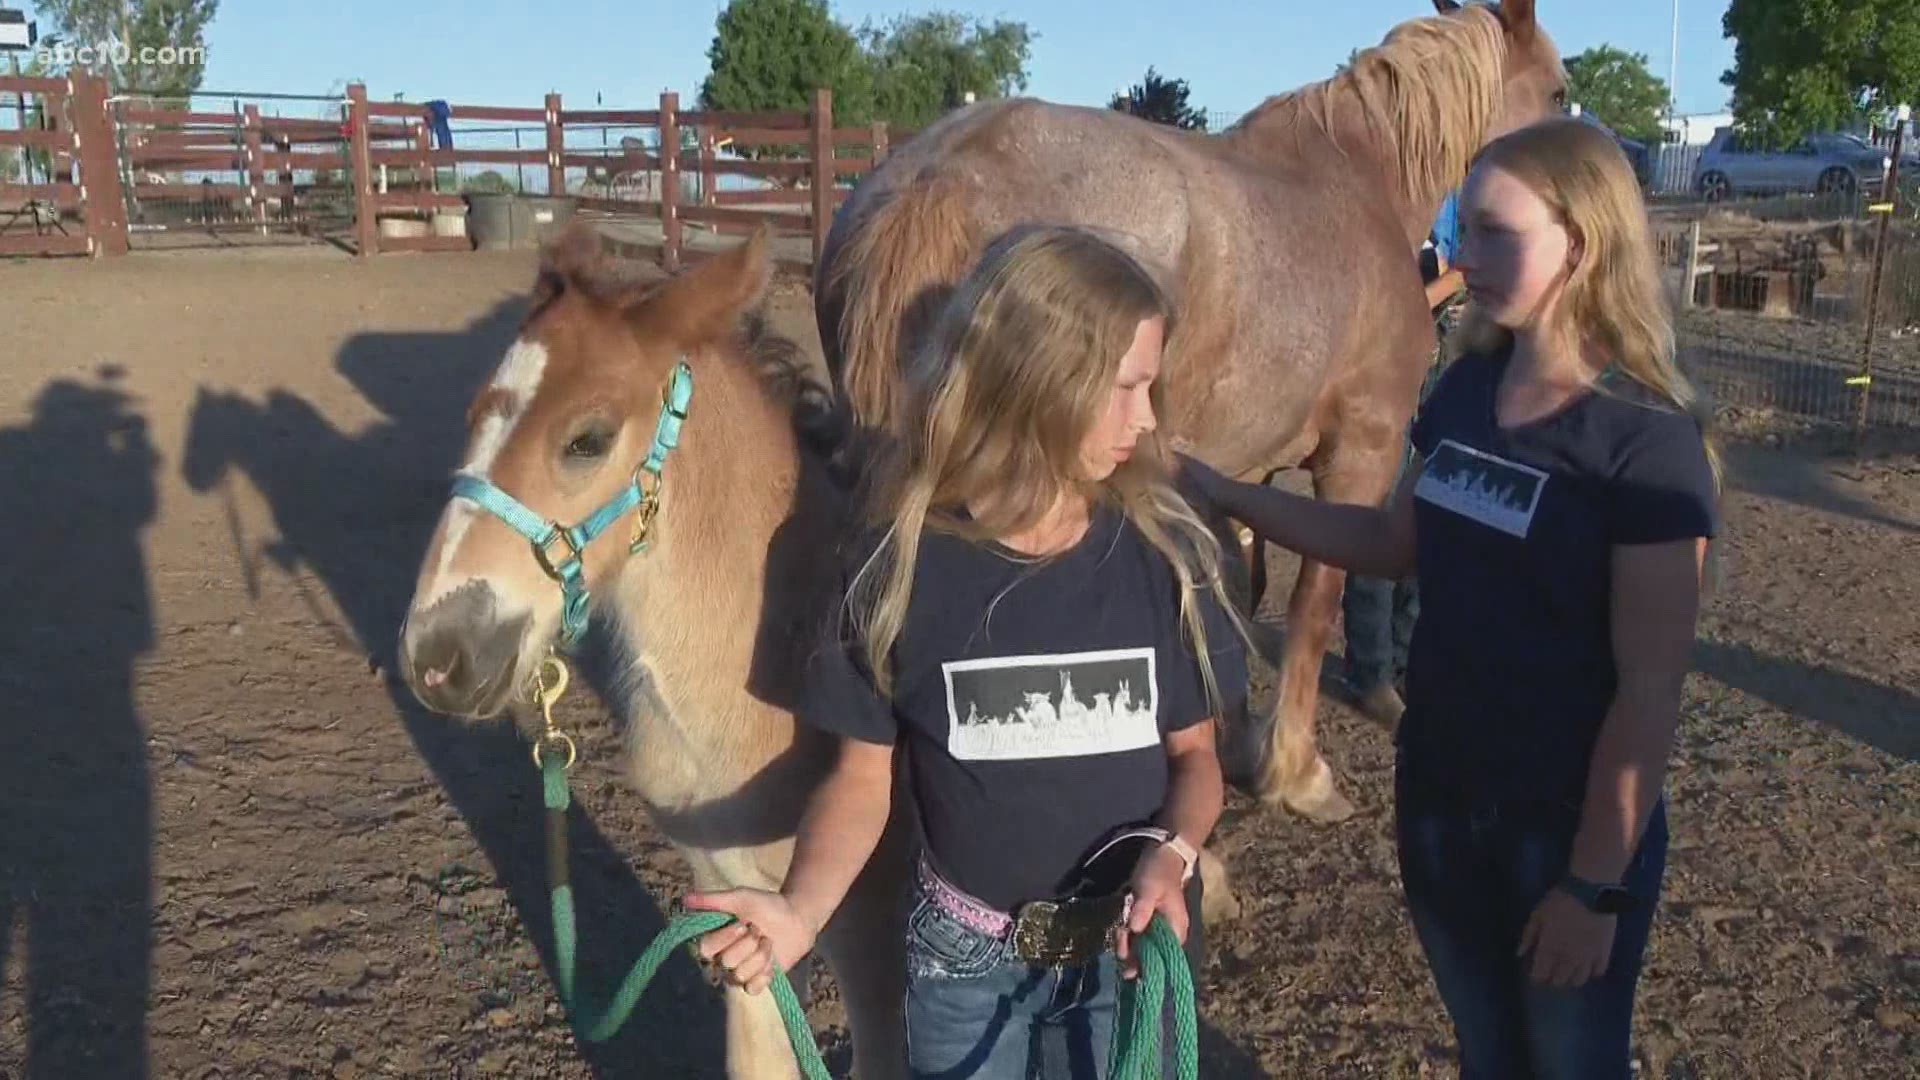 Raise a Glass Ranch has baby Clydesdale horses, already 4 feet tall!